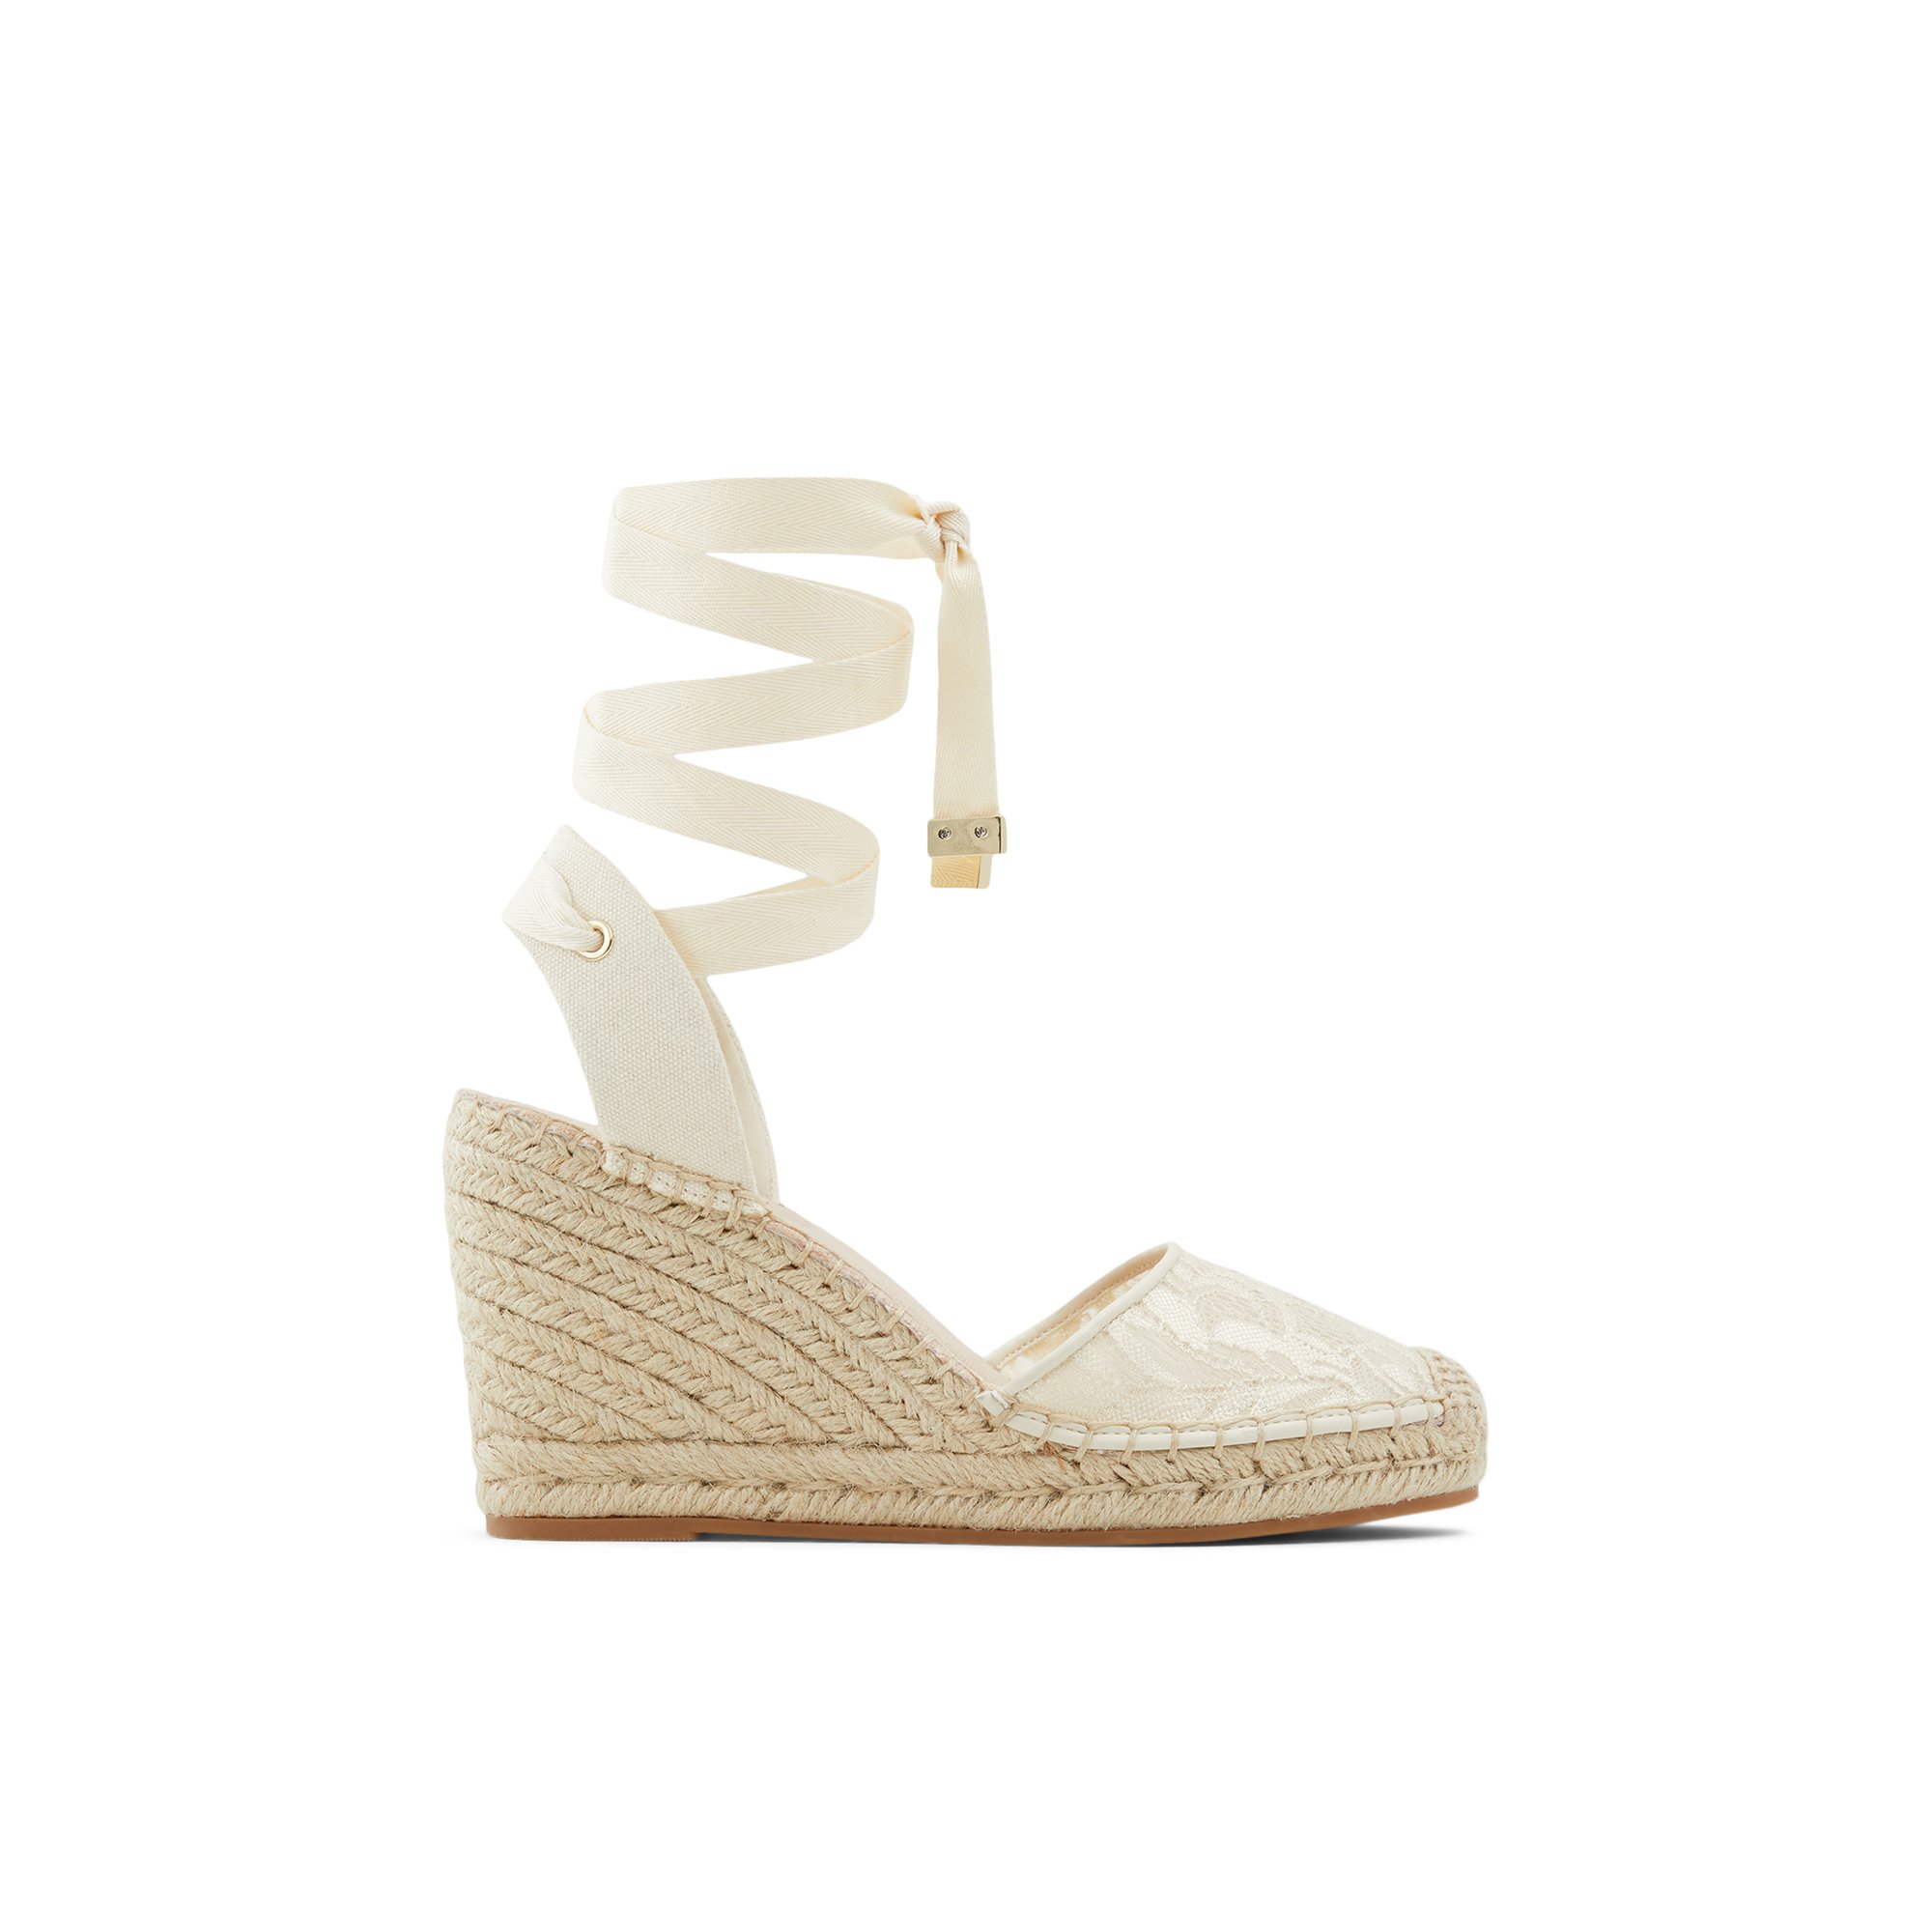 ALDO Efemina - Women's Sandals Wedges - White